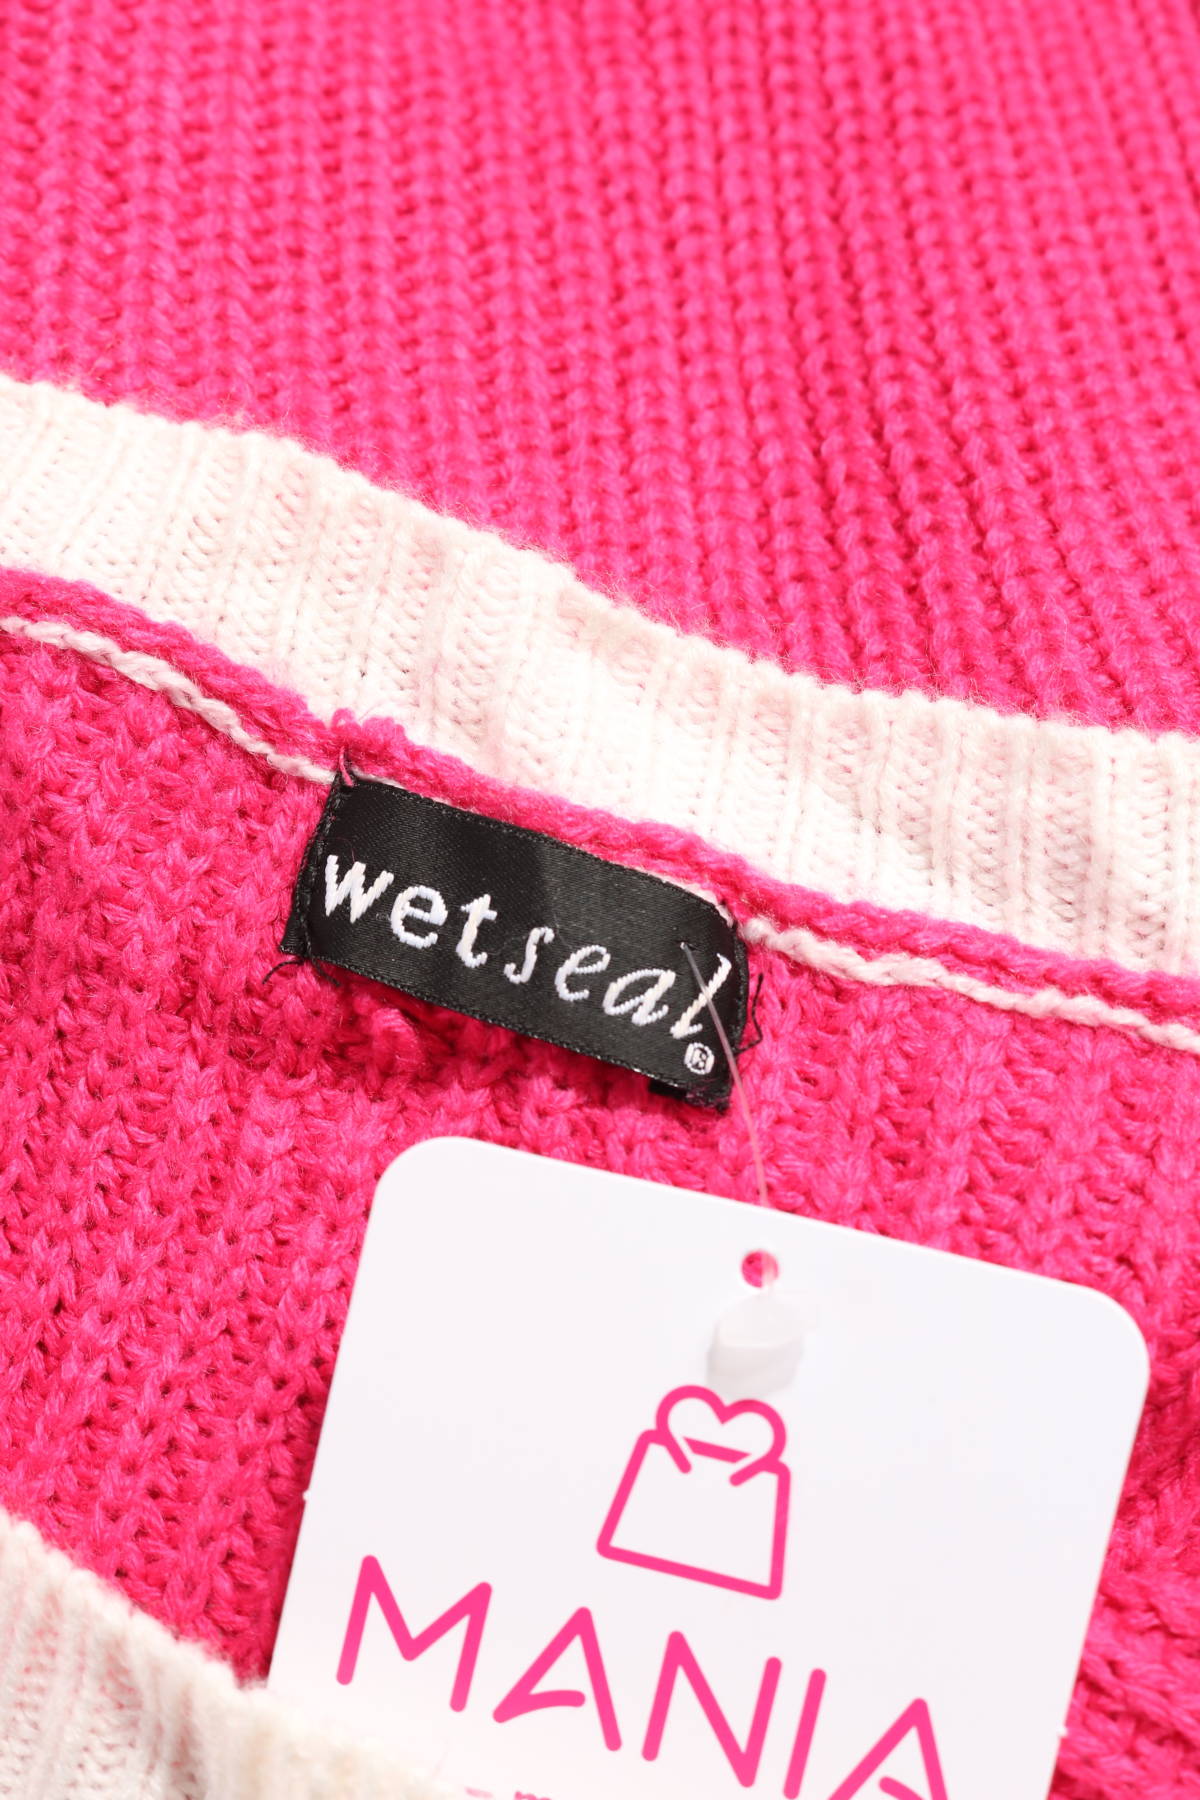 Пуловер WET SEAL3